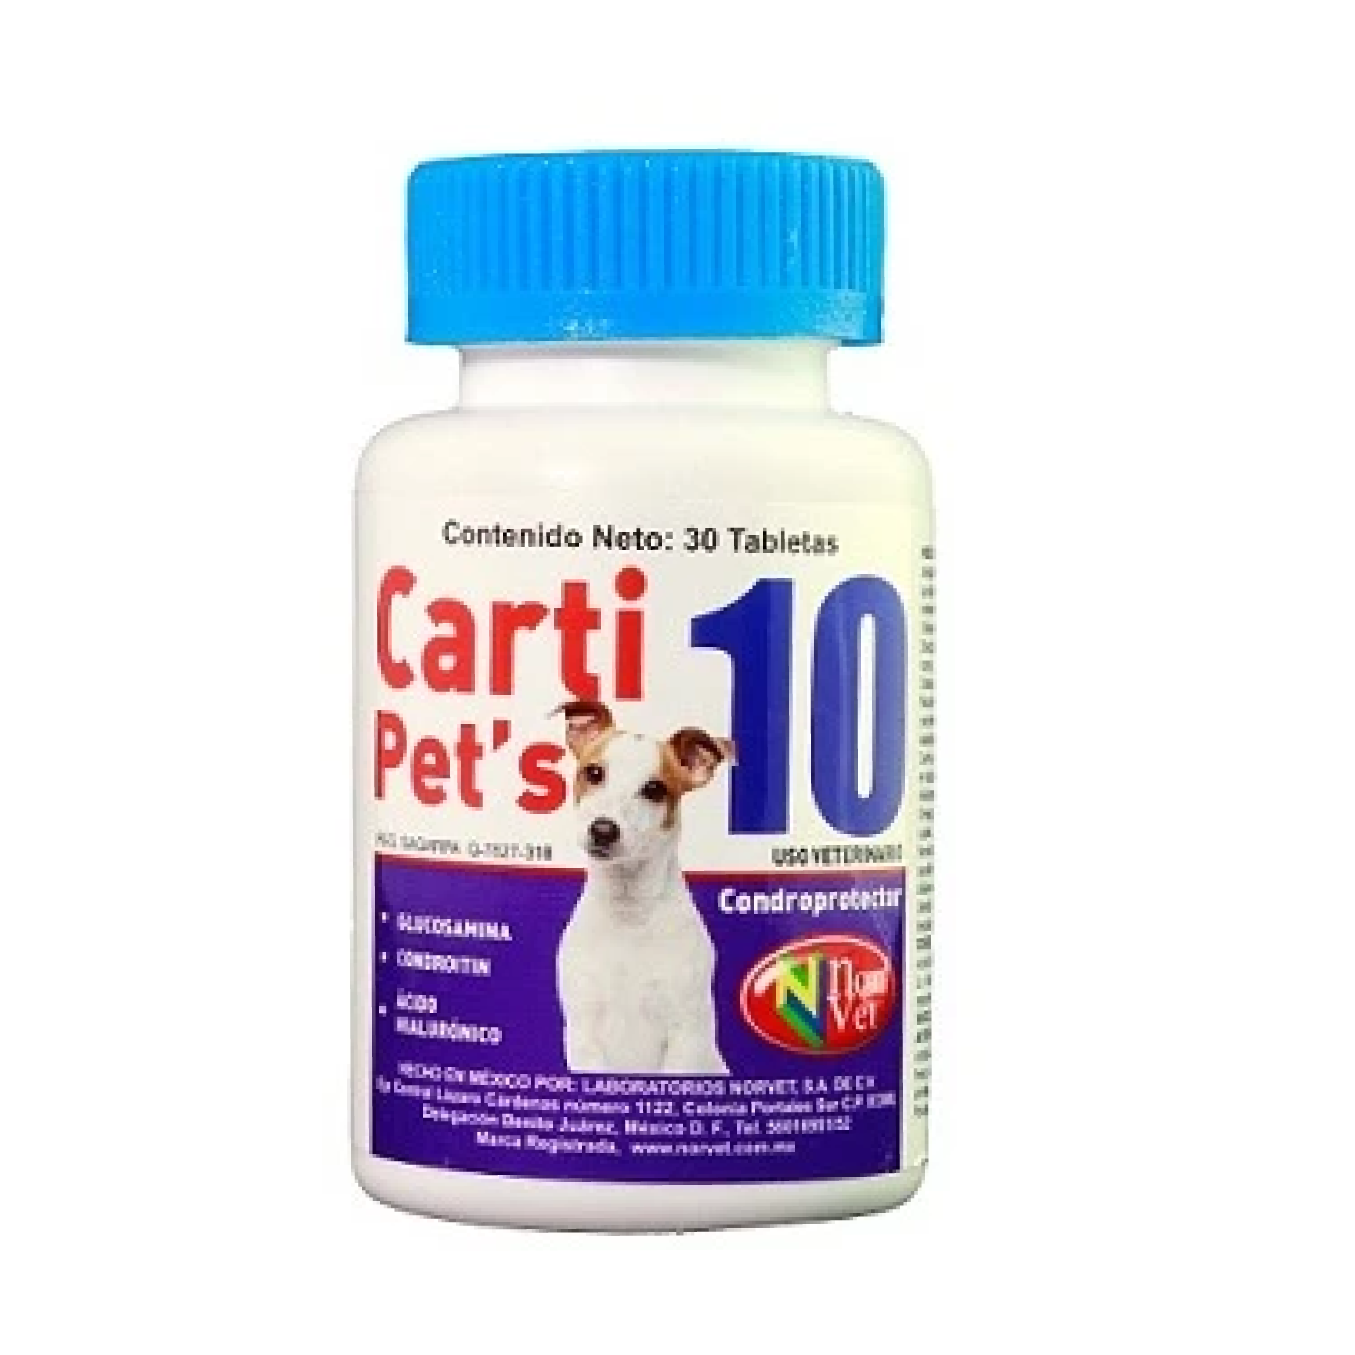 Carti Pets 10 Norvet  30 Tabletas - Condroprotector glucosamina para perro acido hialuronico